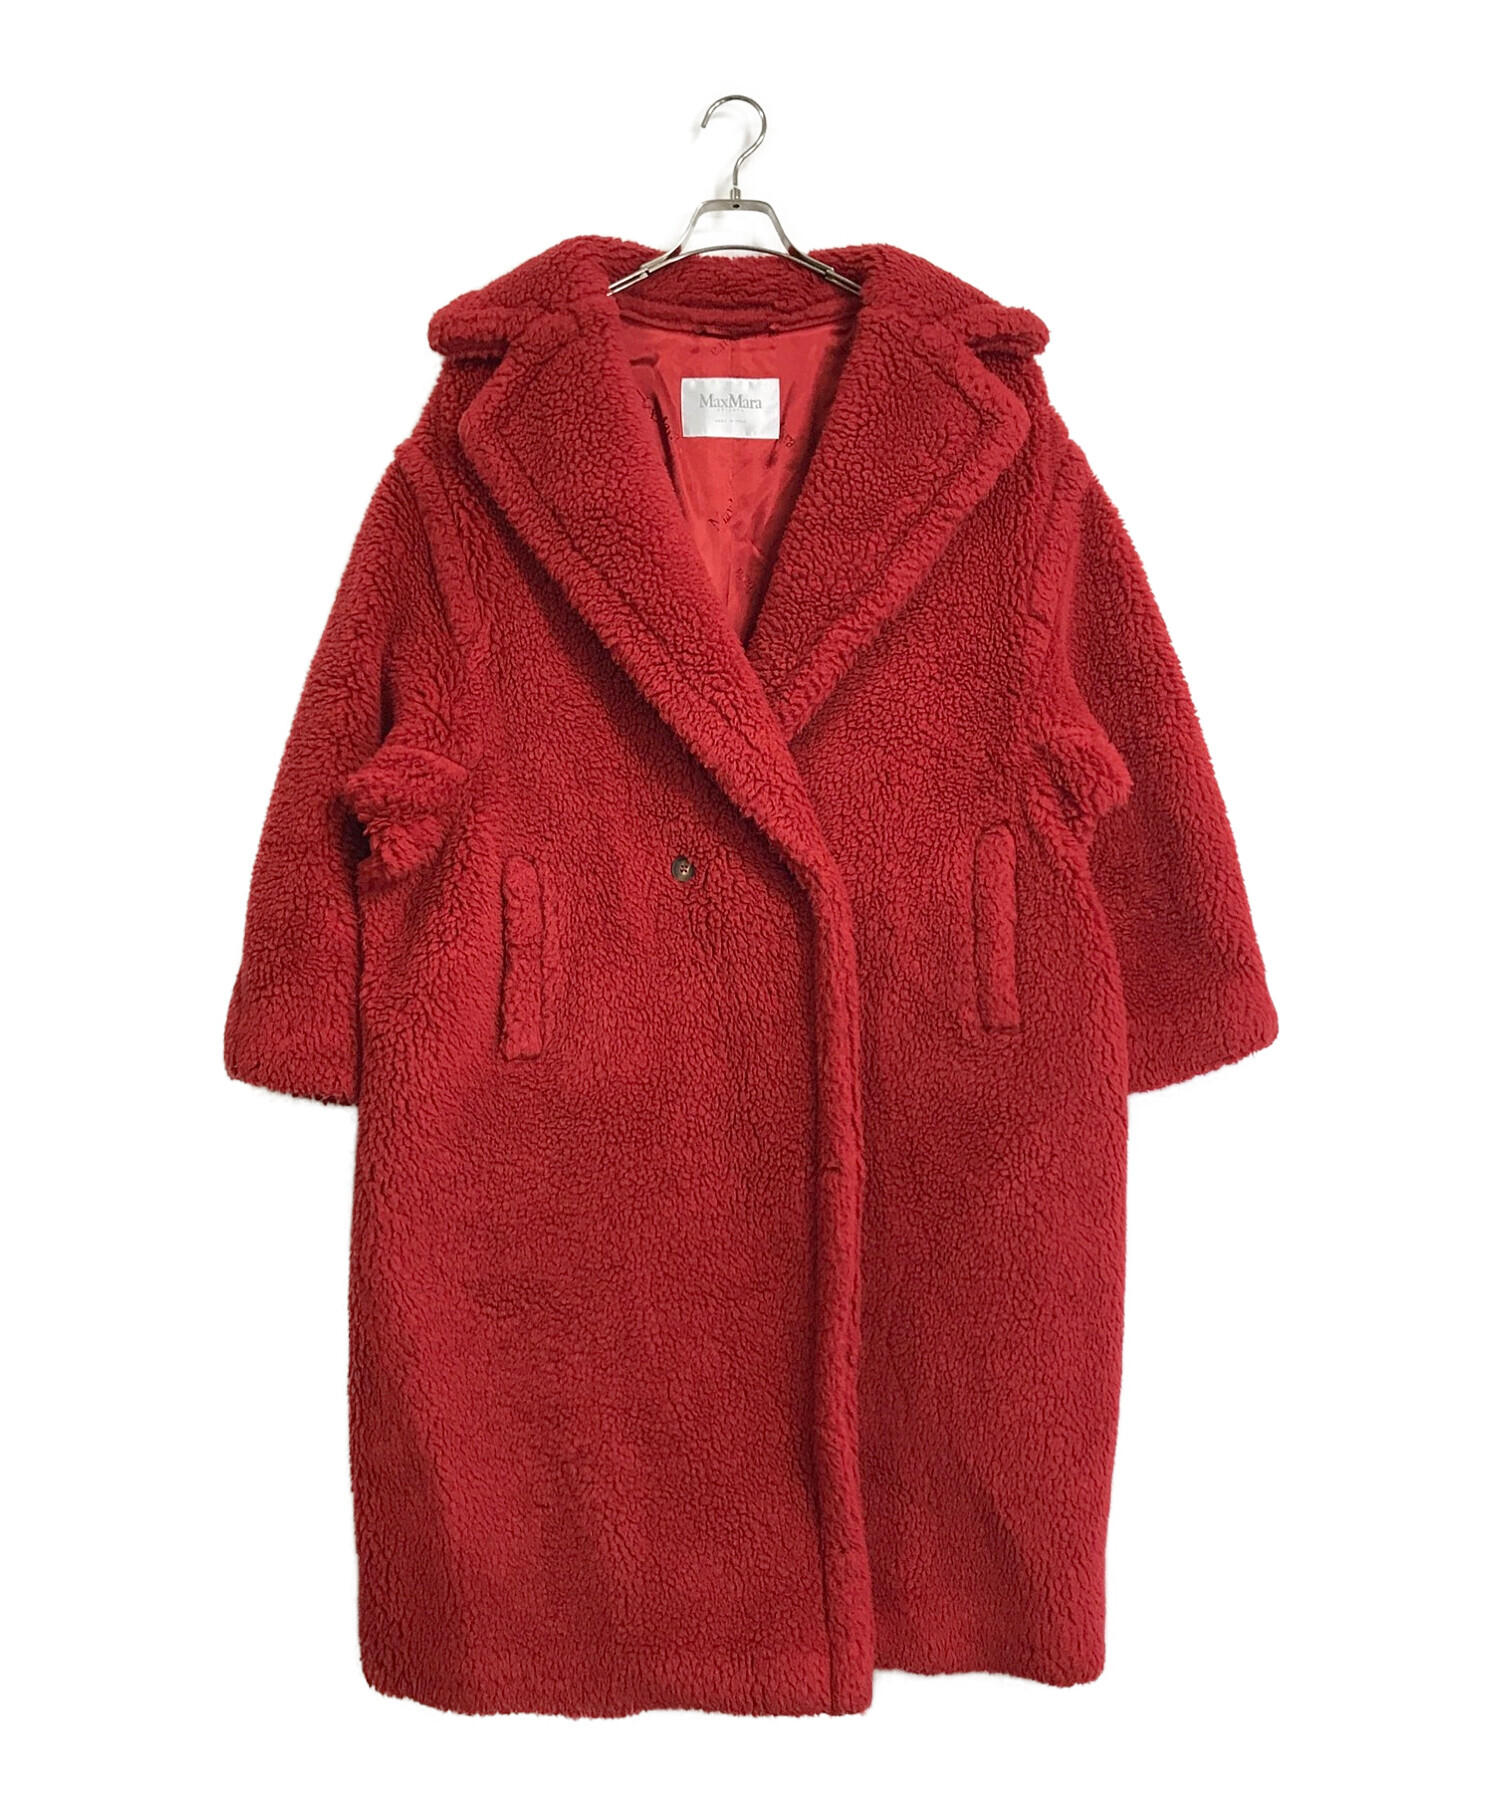 MaxMara コート 赤テーラードジャケット - テーラードジャケット